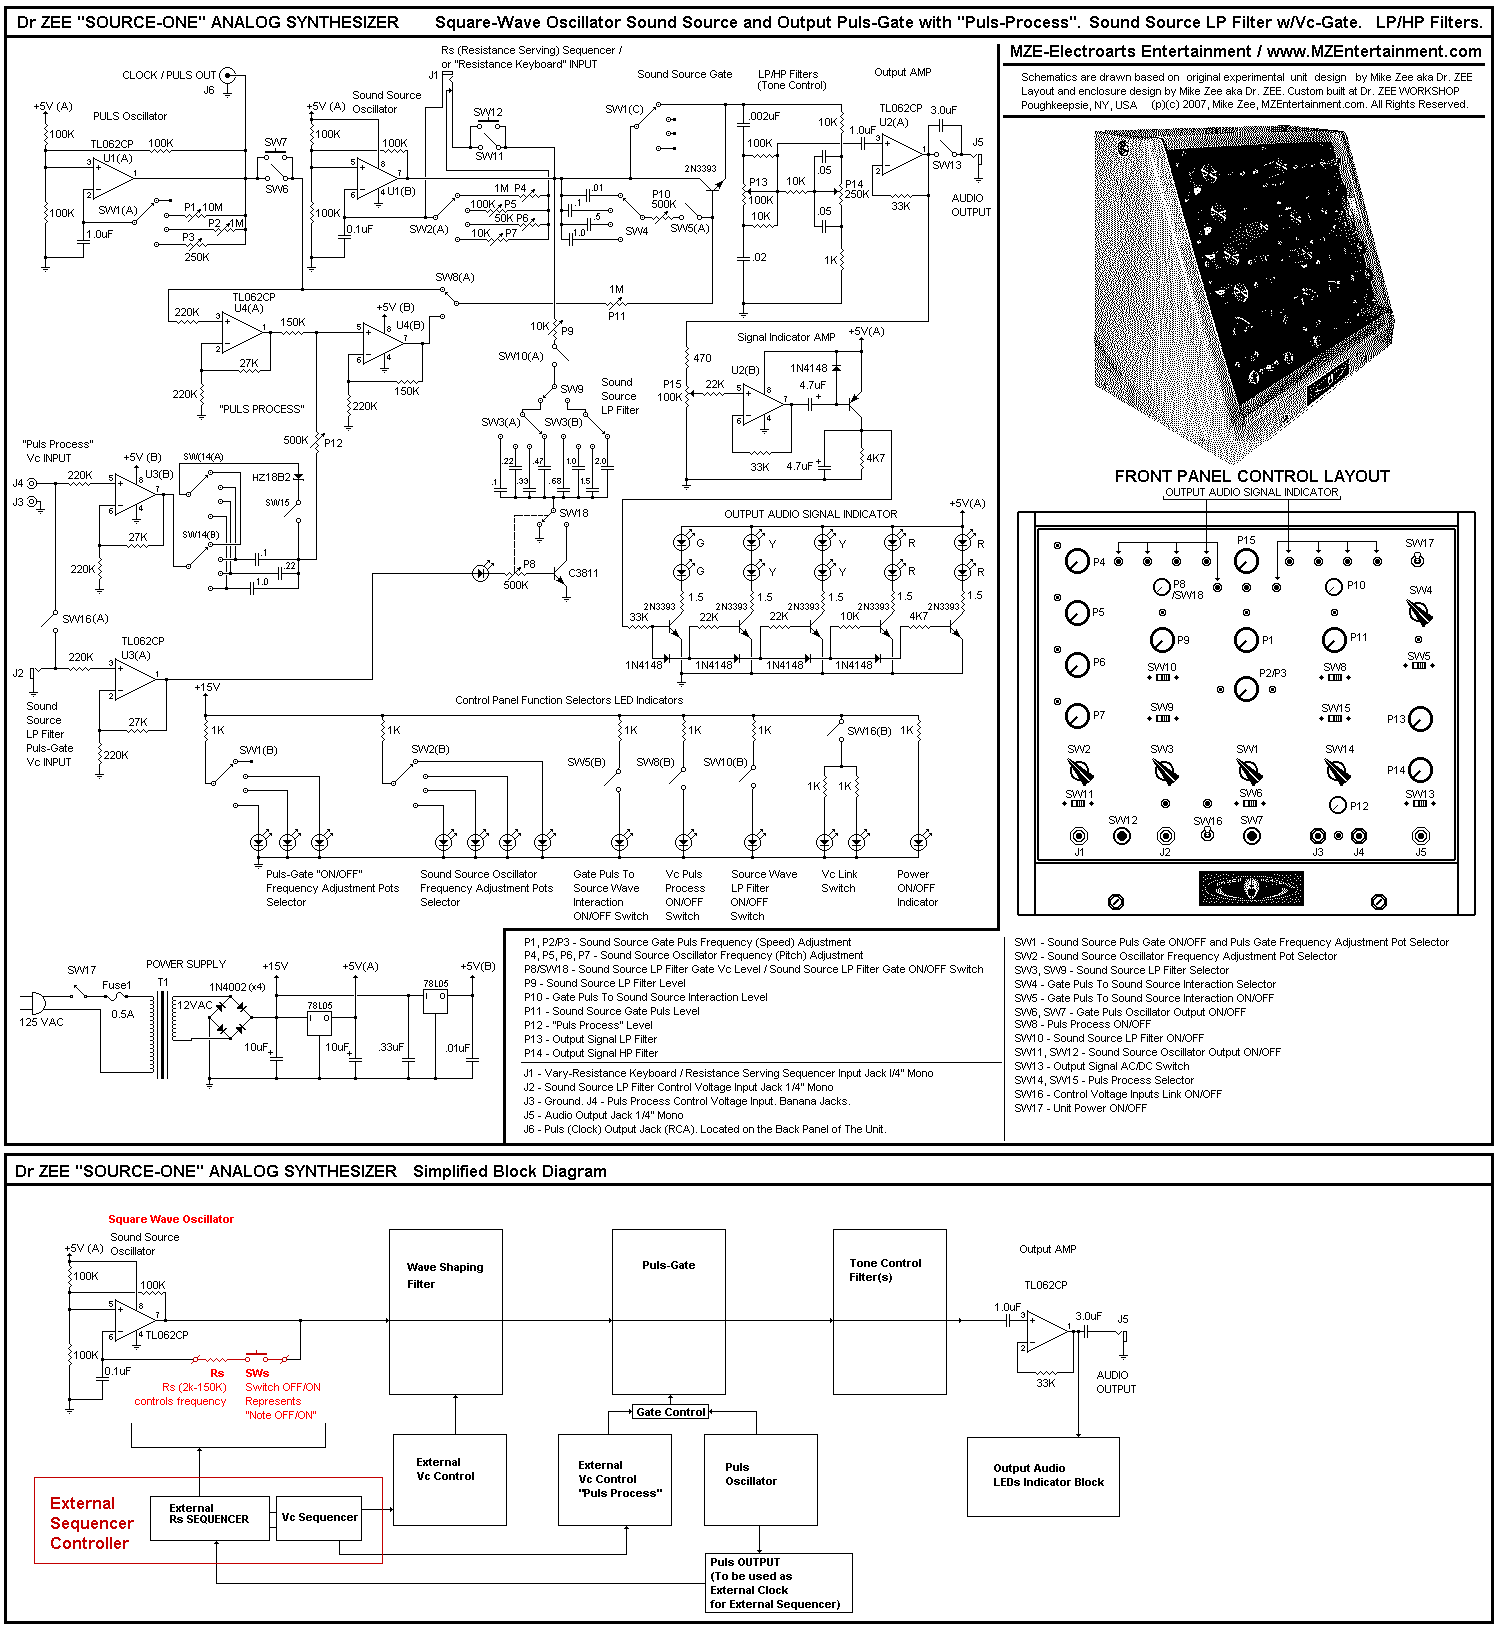 dr_zee_source_one_analog_synthesizer_schematics-1748439